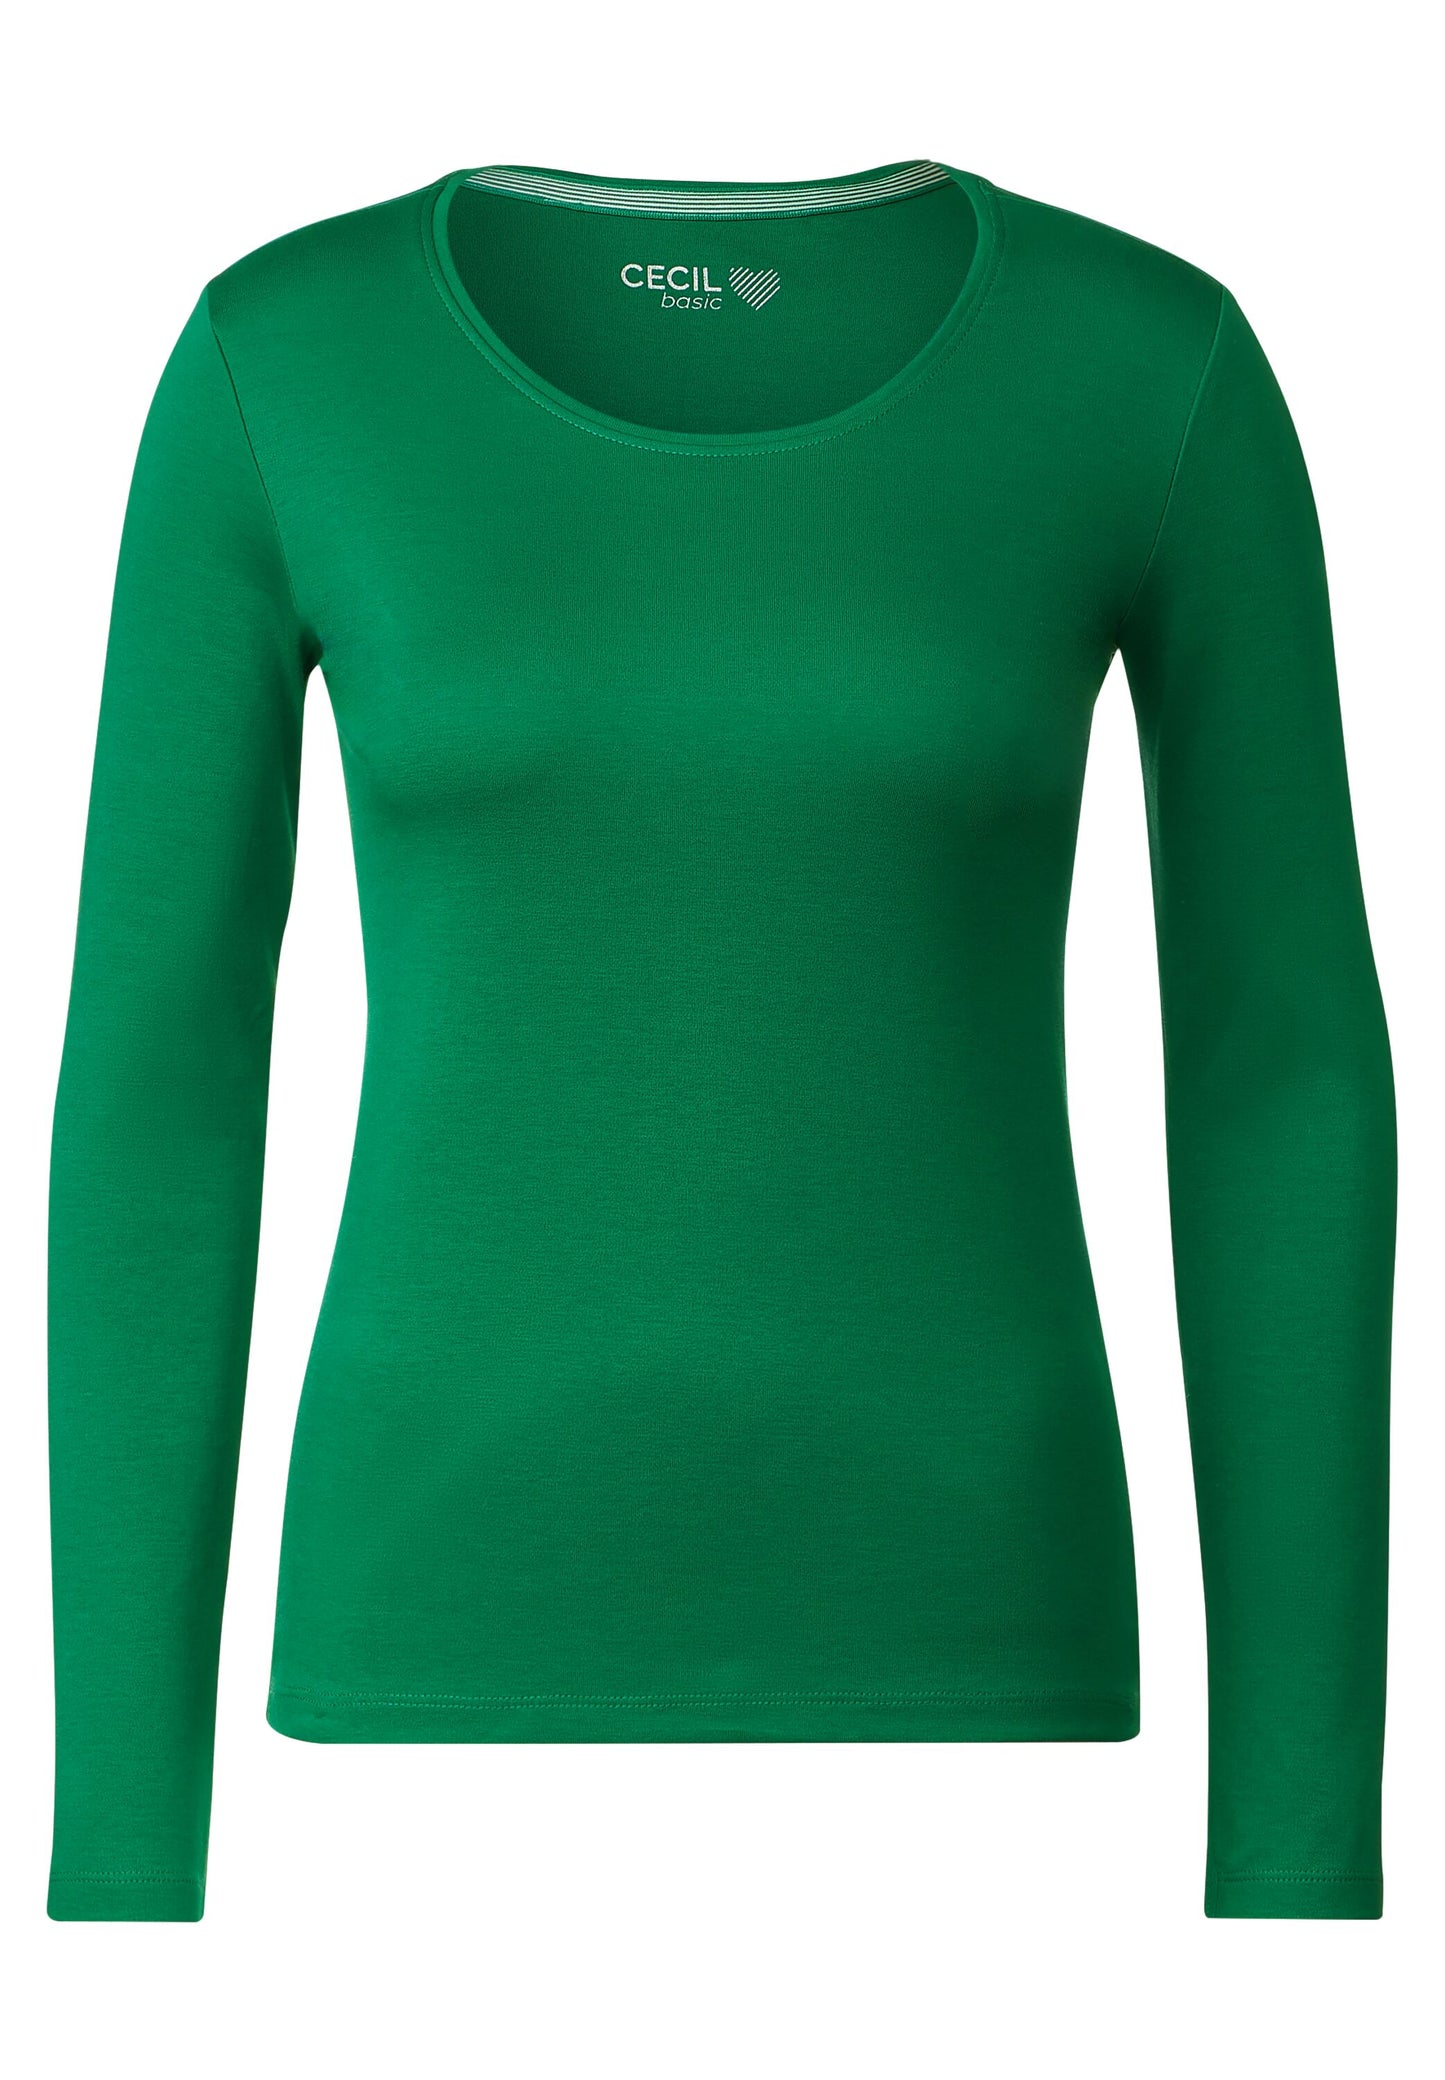 CECIL - Basic Langarmshirt - grün